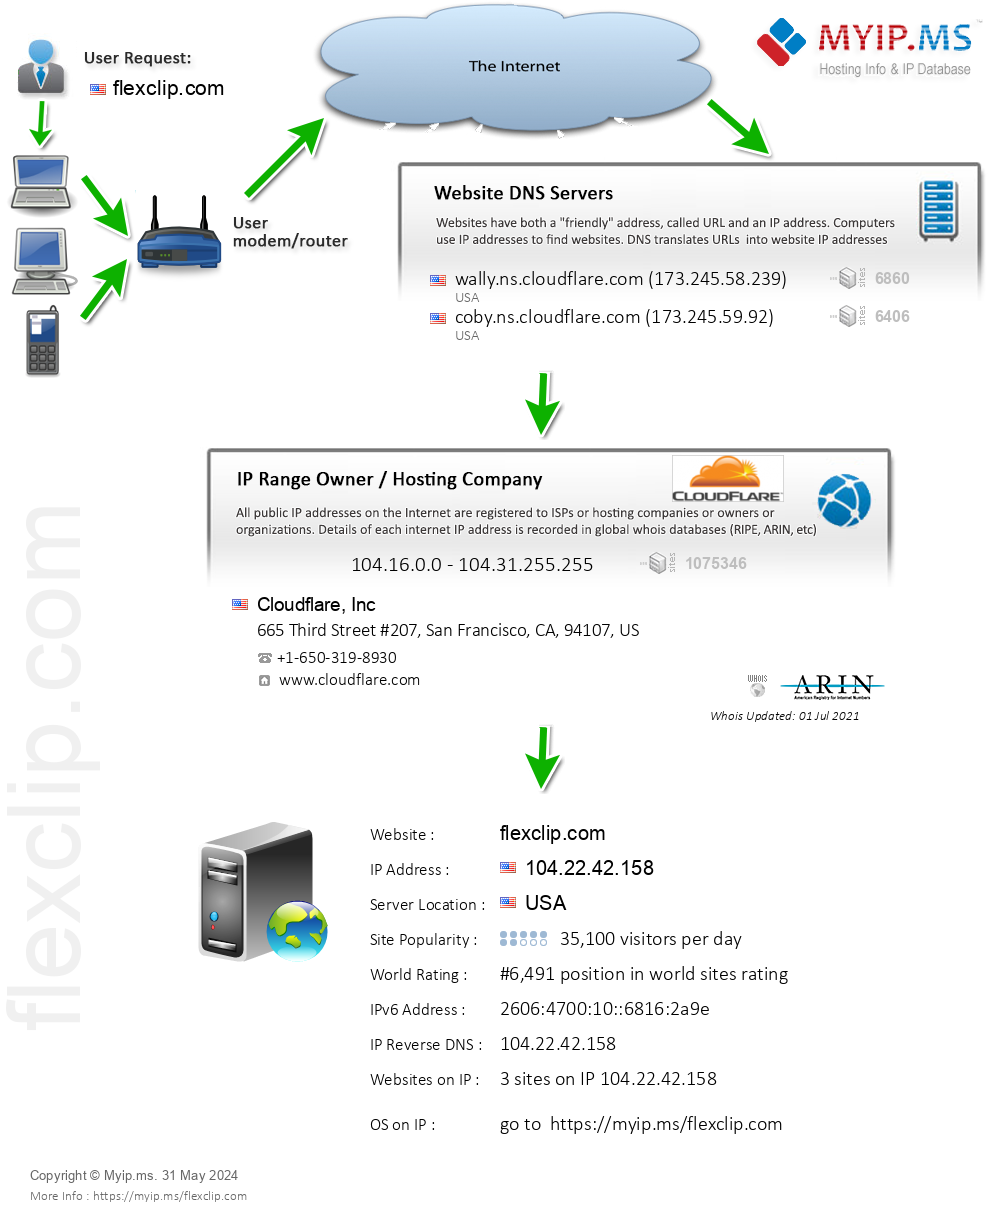 Flexclip.com - Website Hosting Visual IP Diagram